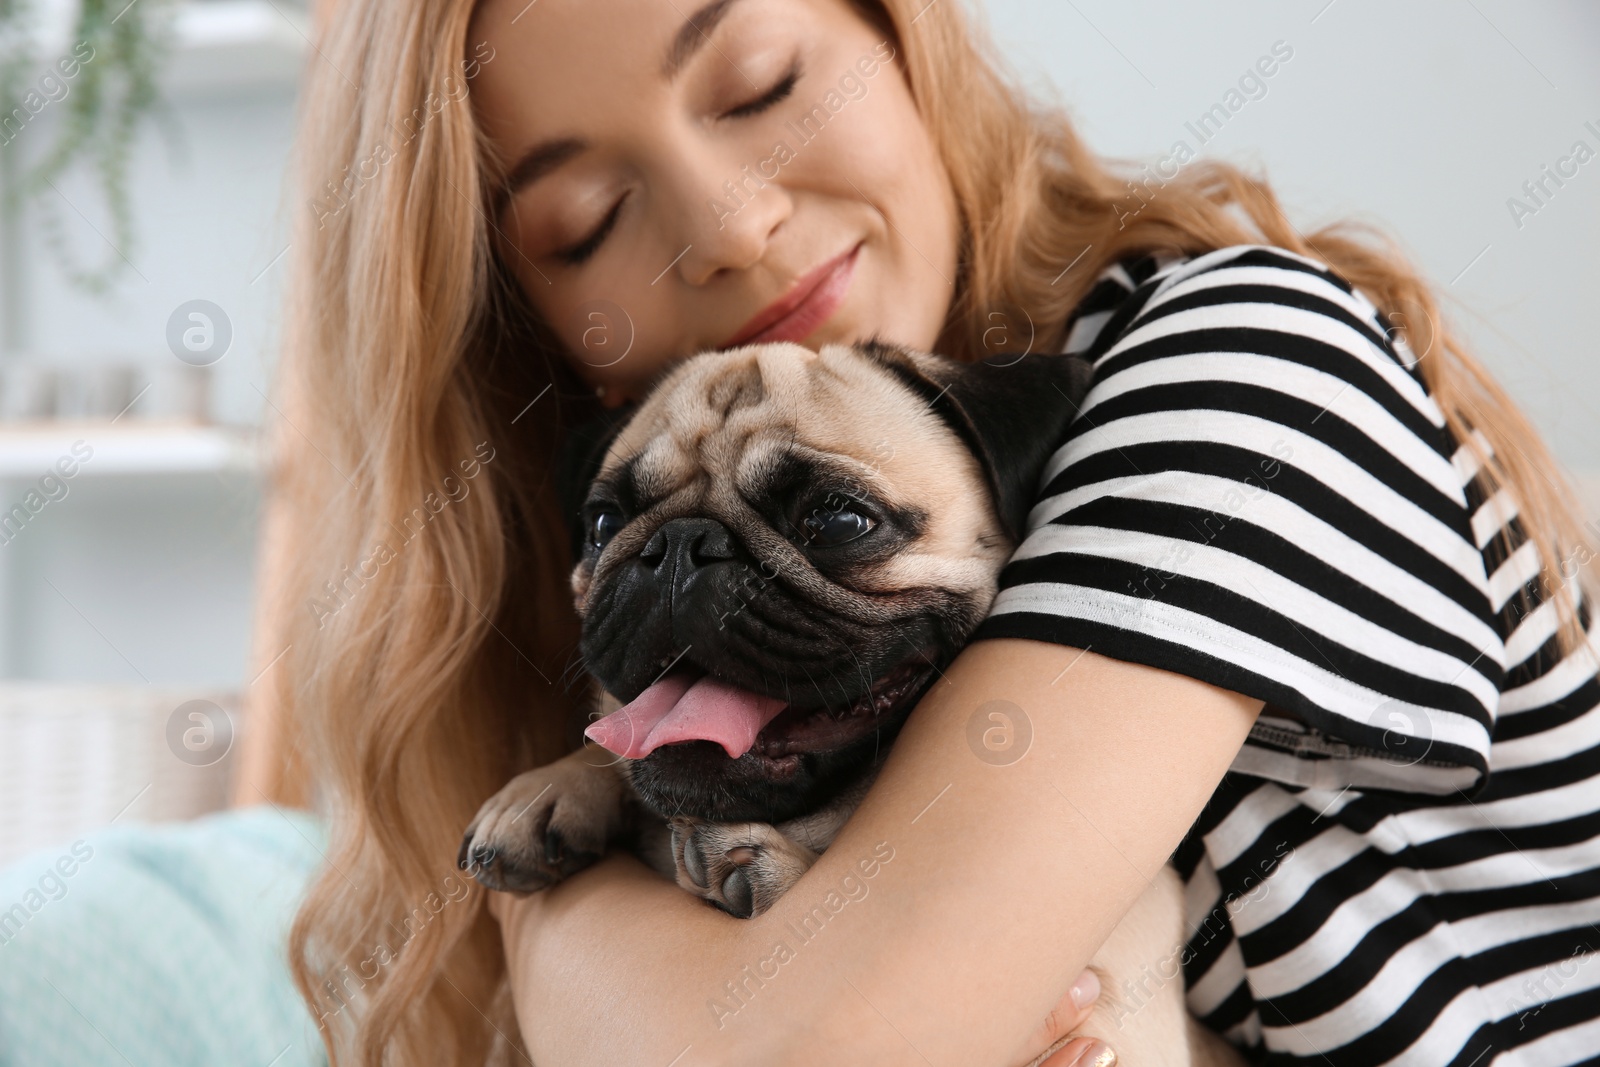 Photo of Woman with cute pug dog at home. Animal adoption